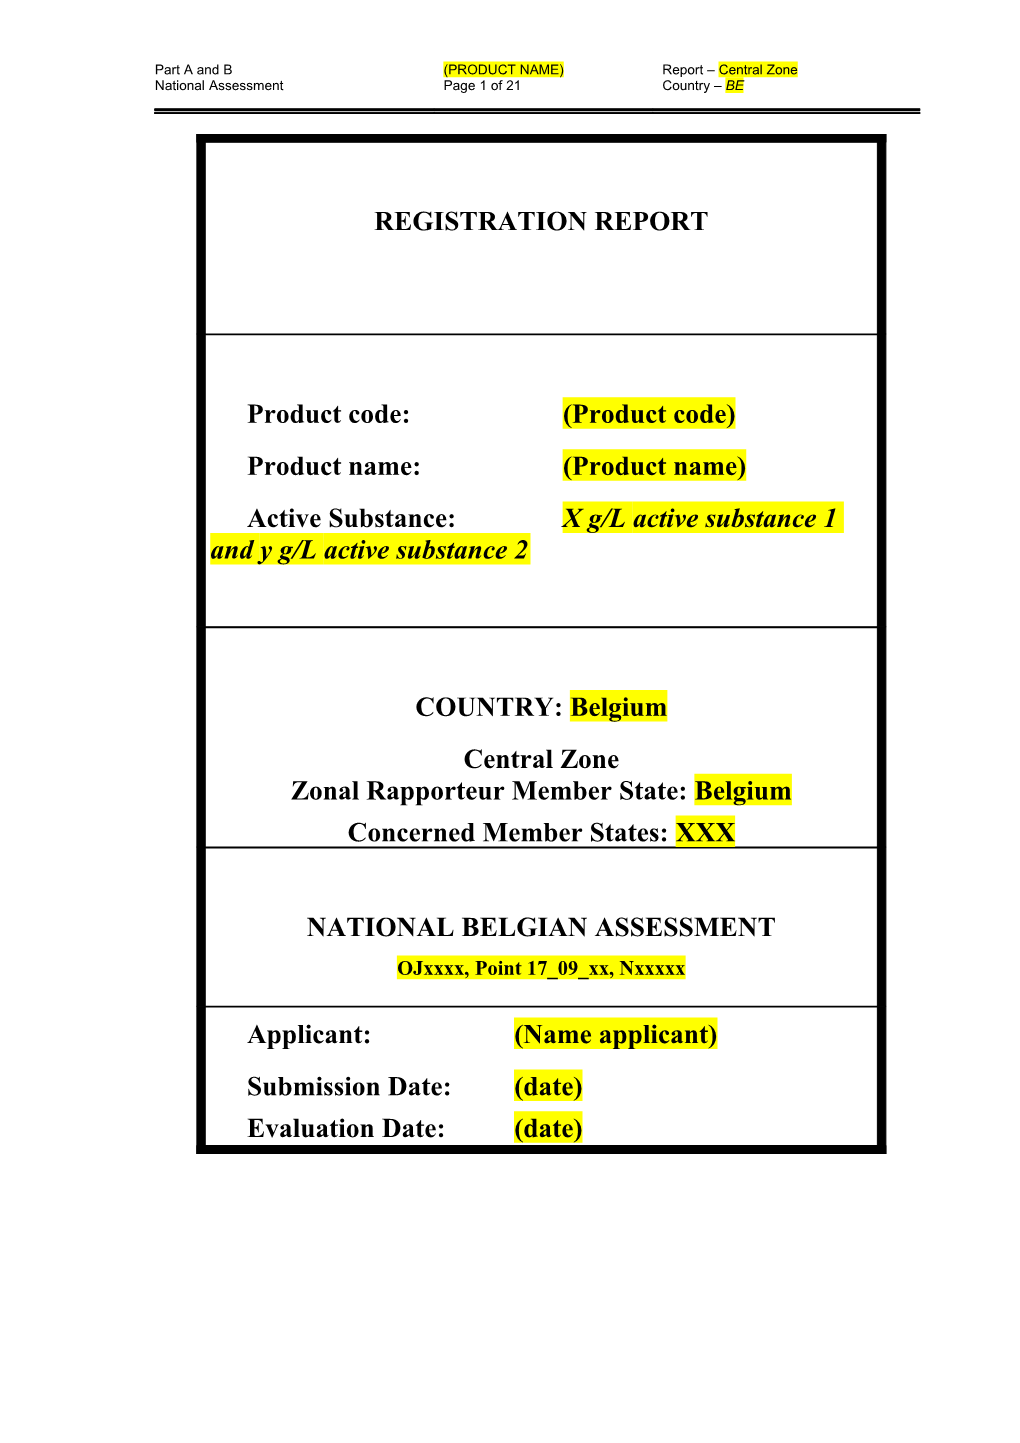 Re-Registration Assessment Report